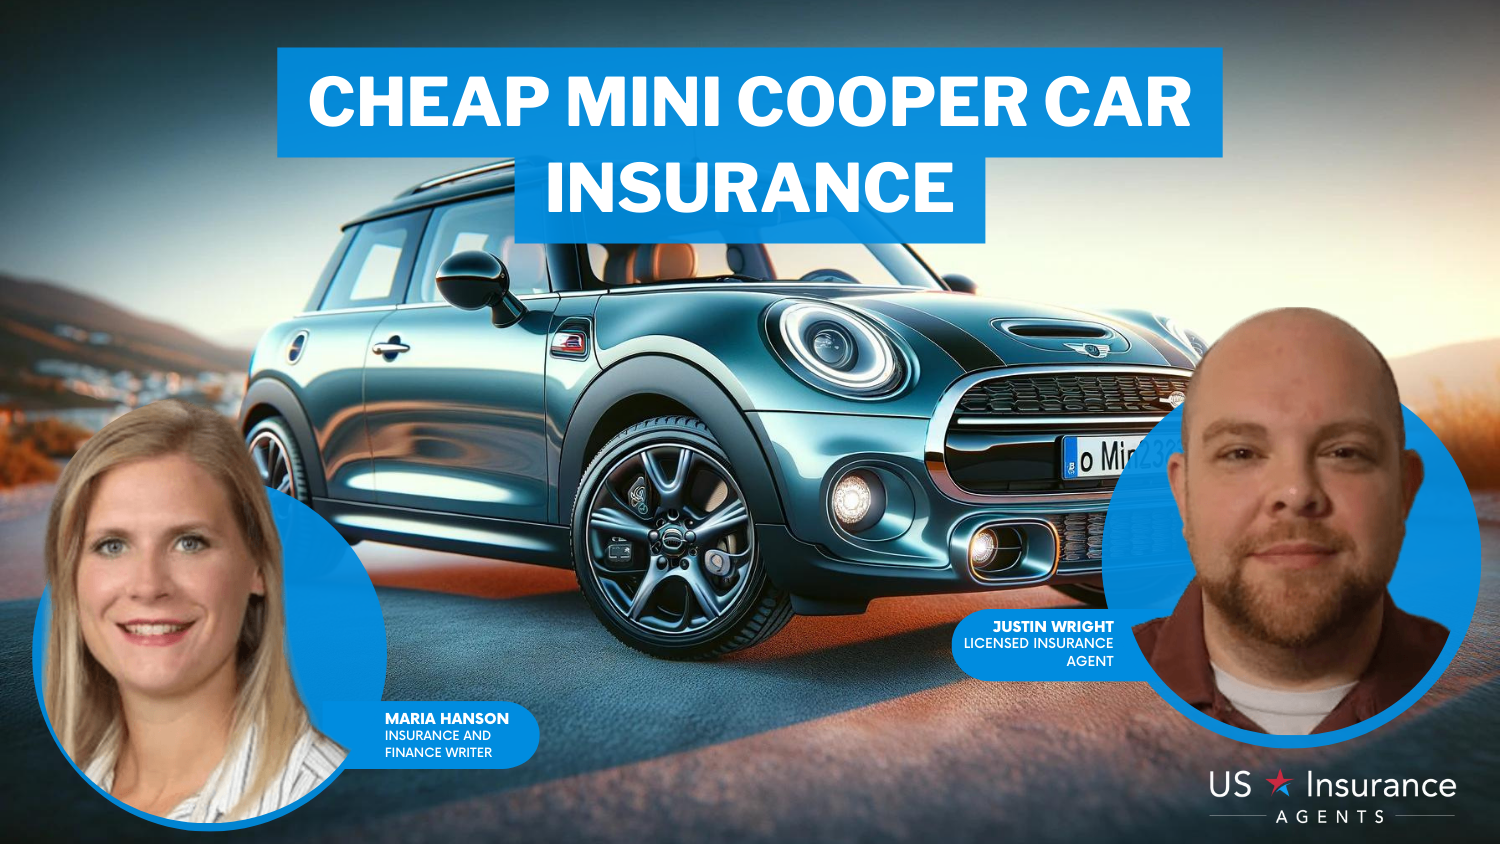 USAA, Safeco and AAA: Cheap MINI Cooper Car Insurance